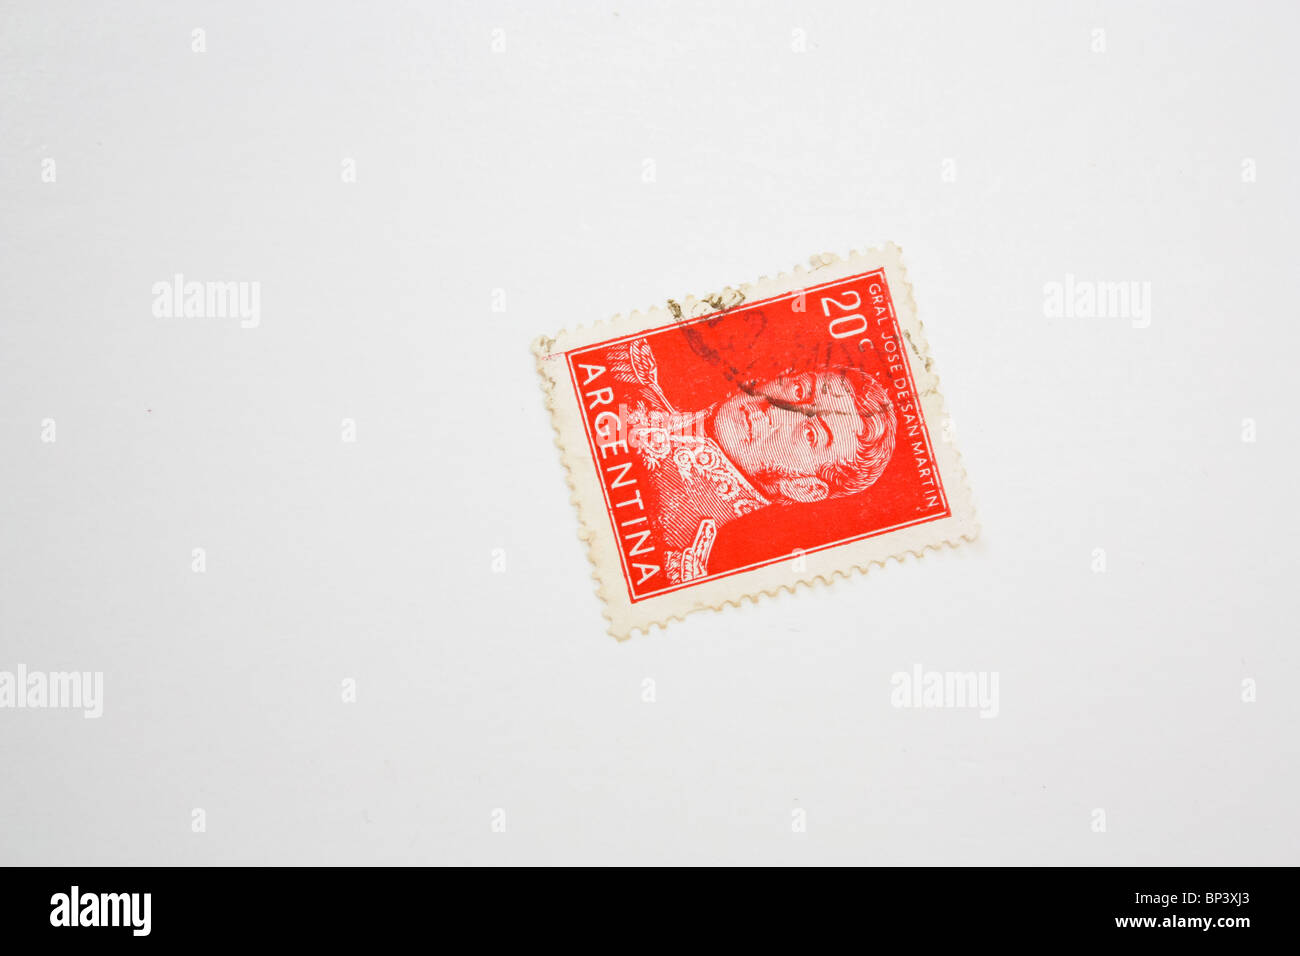 Argentina stamp cutout Stock Photo